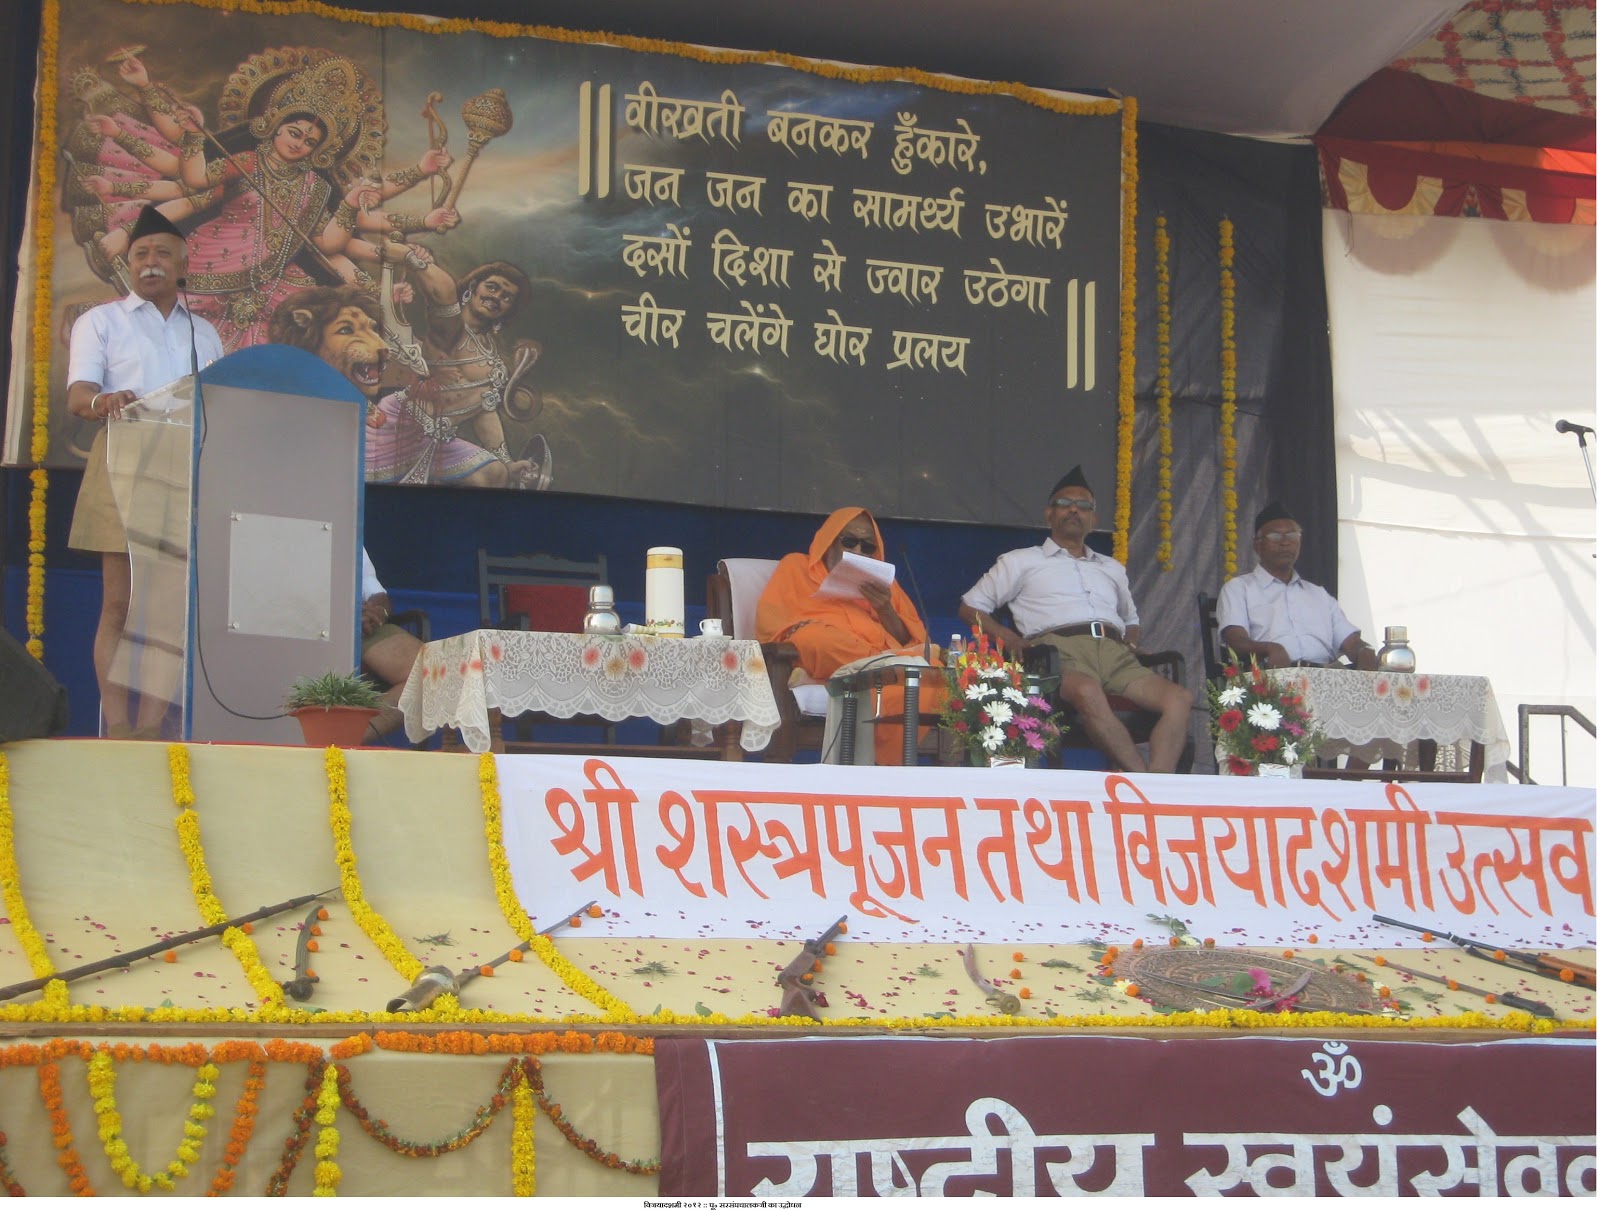 RSS Vijayadasami 2012 Speech by Sarsanghachalak Sri Mohan Bhagawat at Nagpur